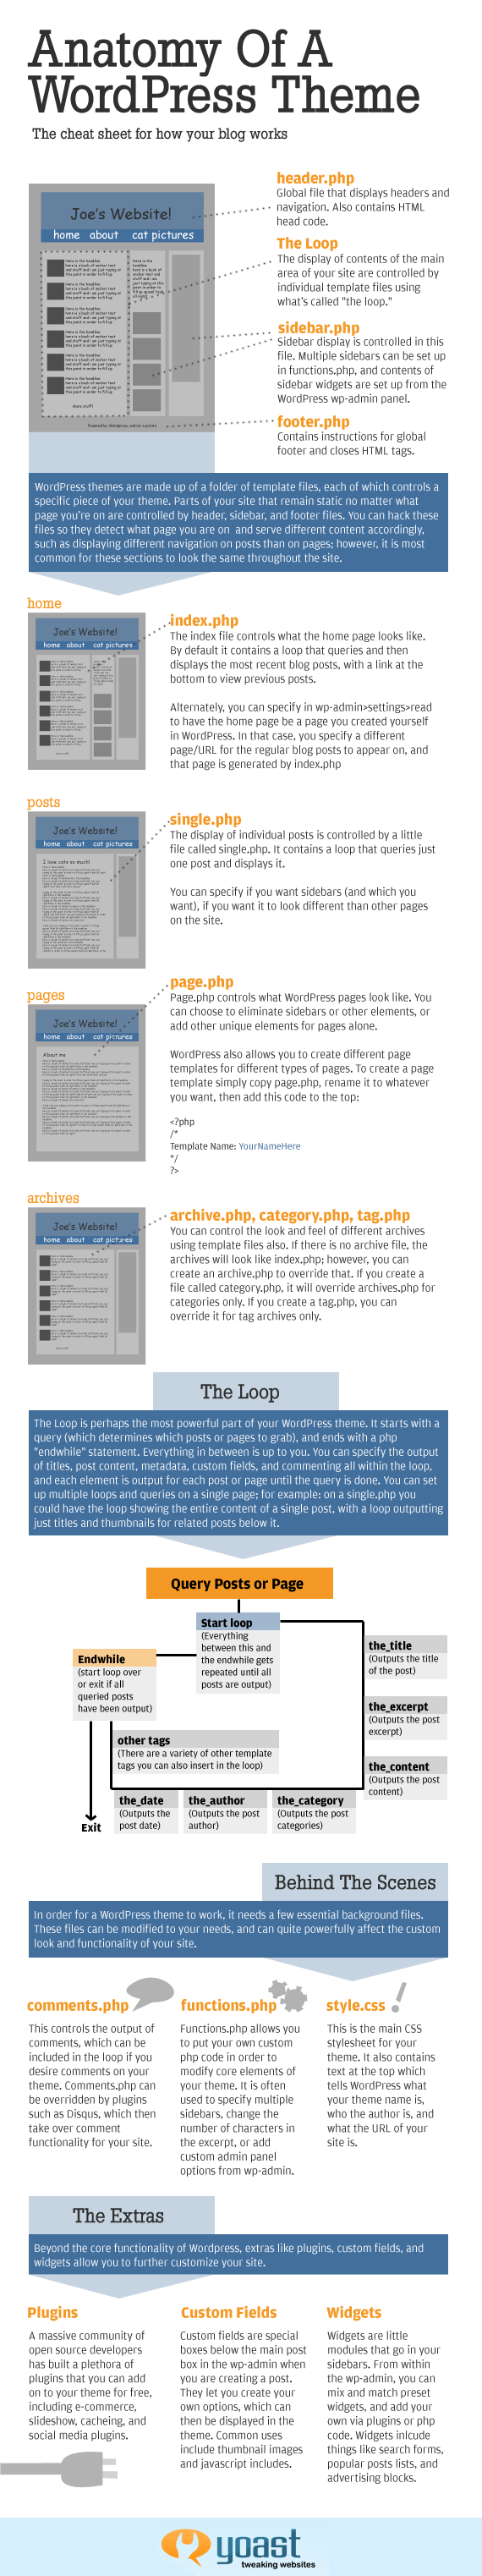 WordPress Anatomy of a Theme Infographic